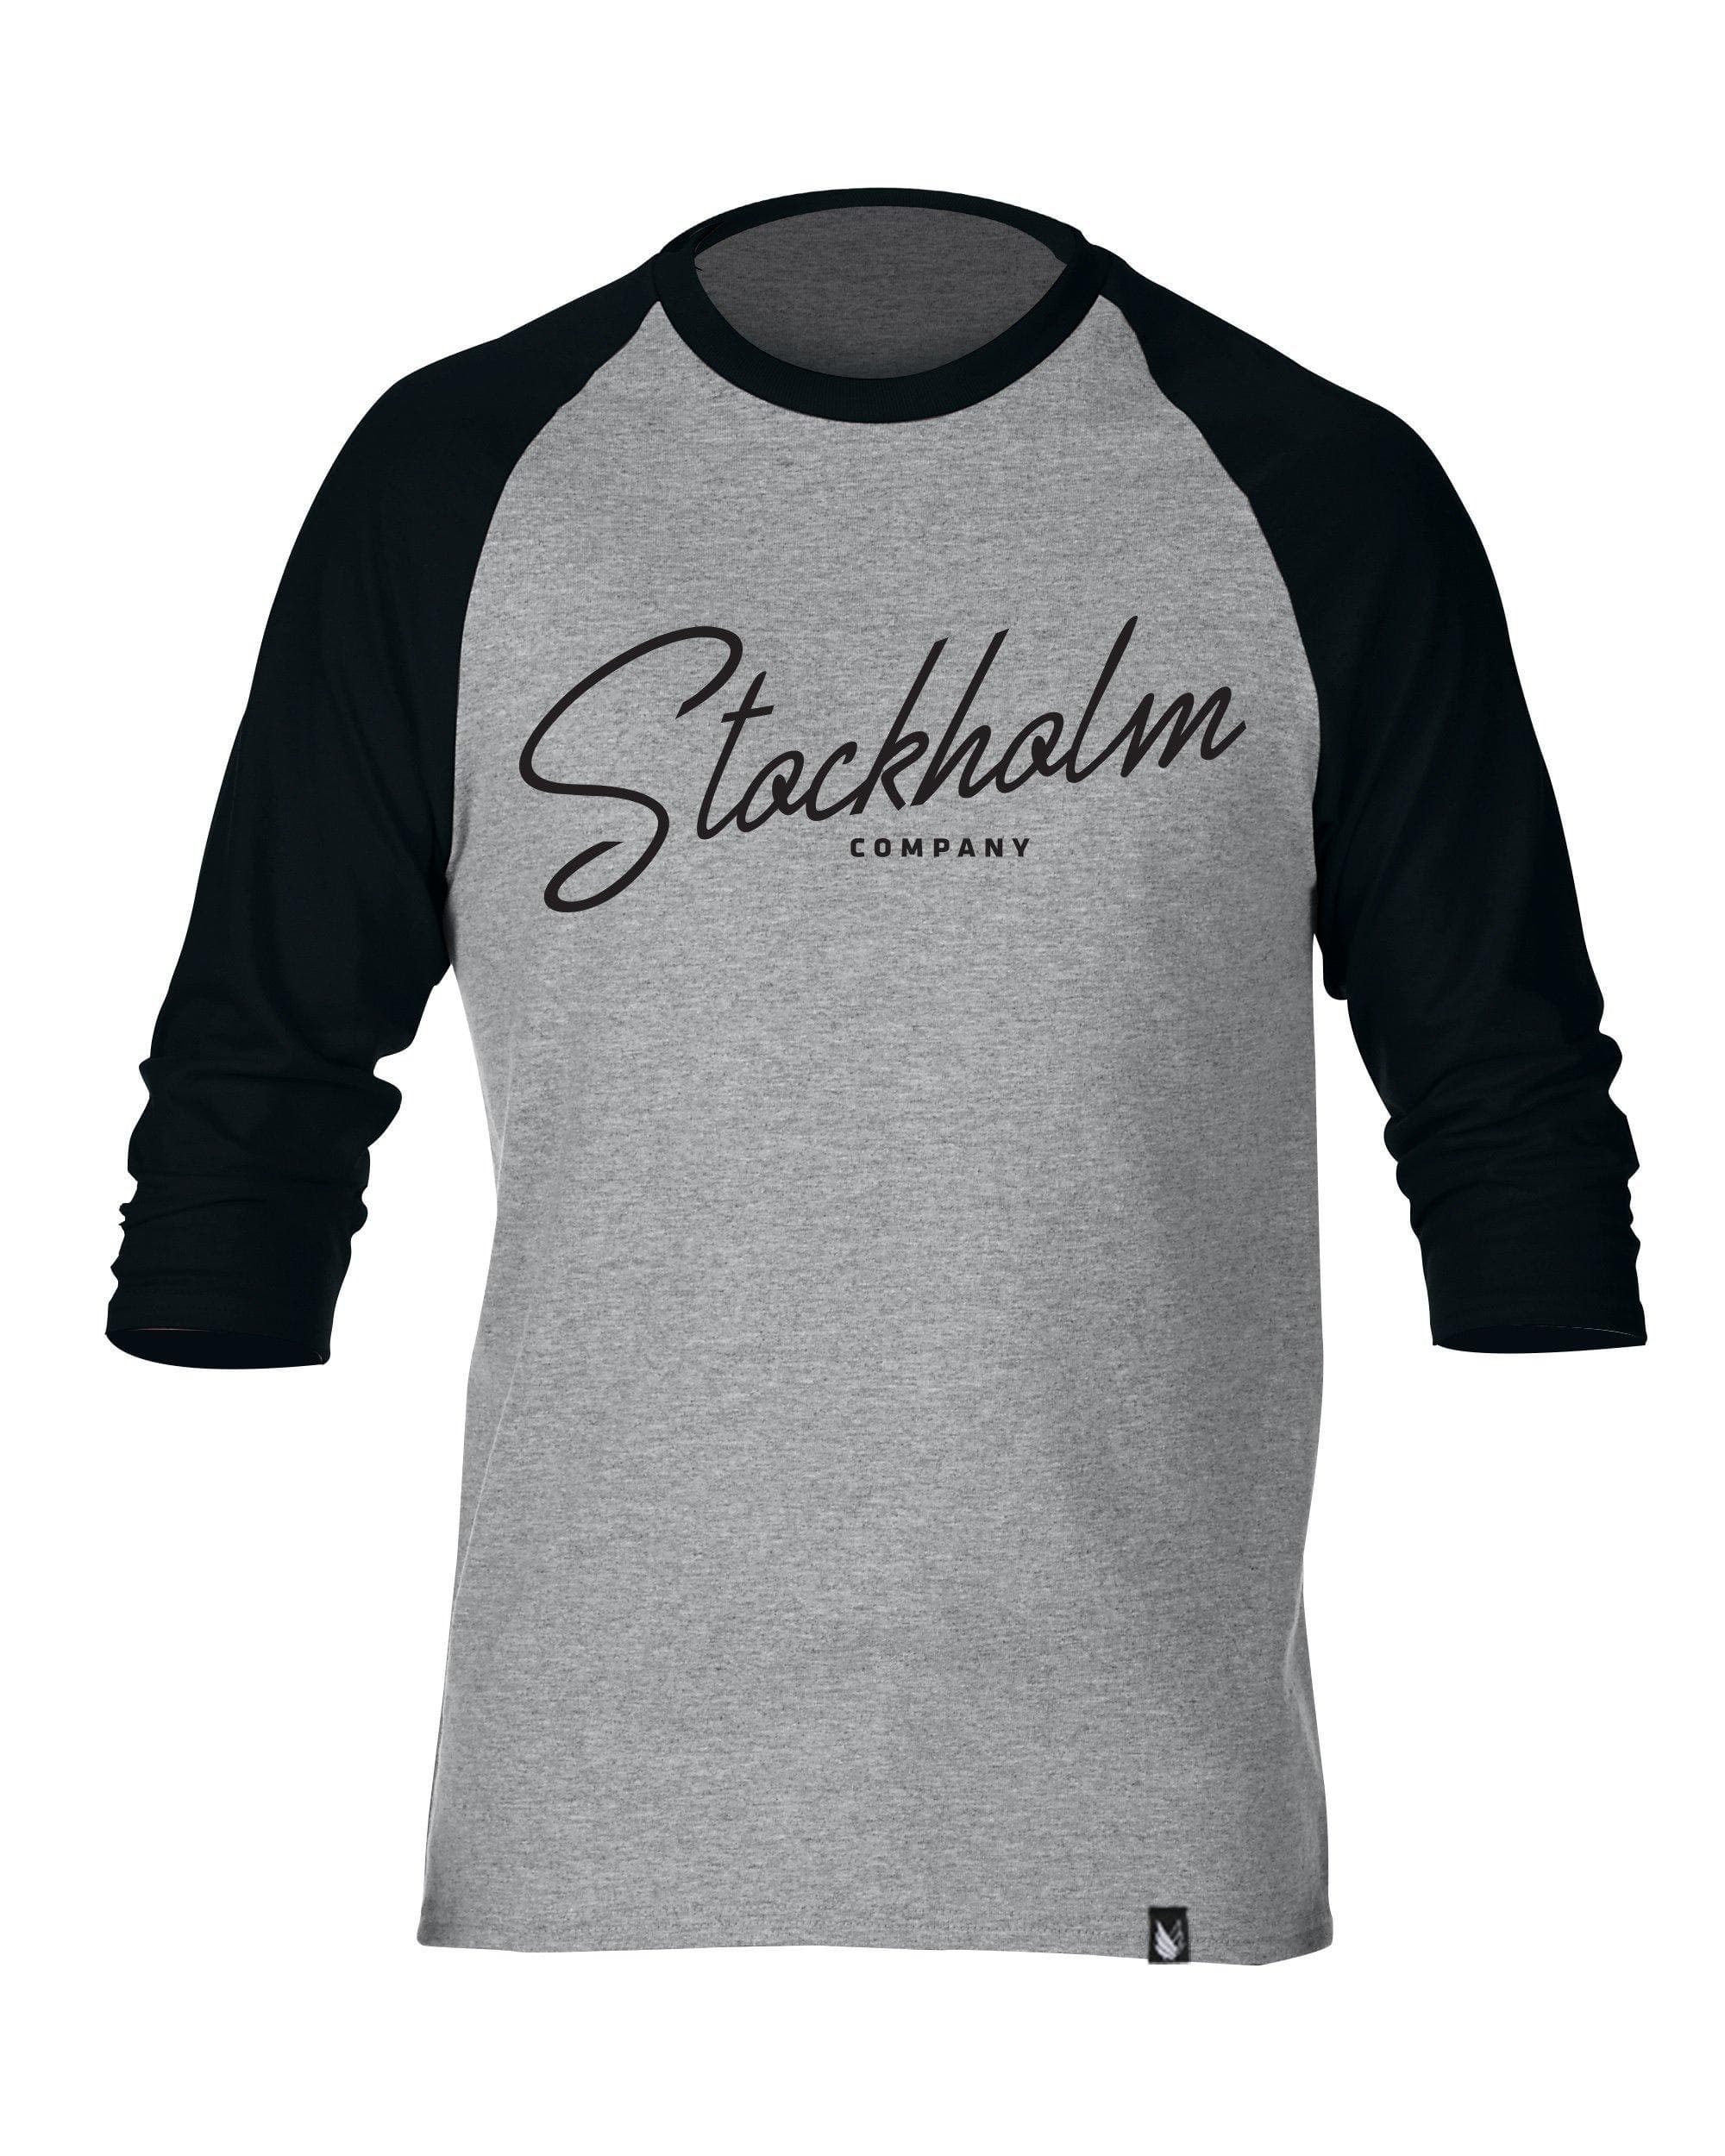 Stockholm cursiva - Raglan 3/4 beisbolera - Stockholm Co. - Playera - Beisbolera, hombre, stkm originals, unisex